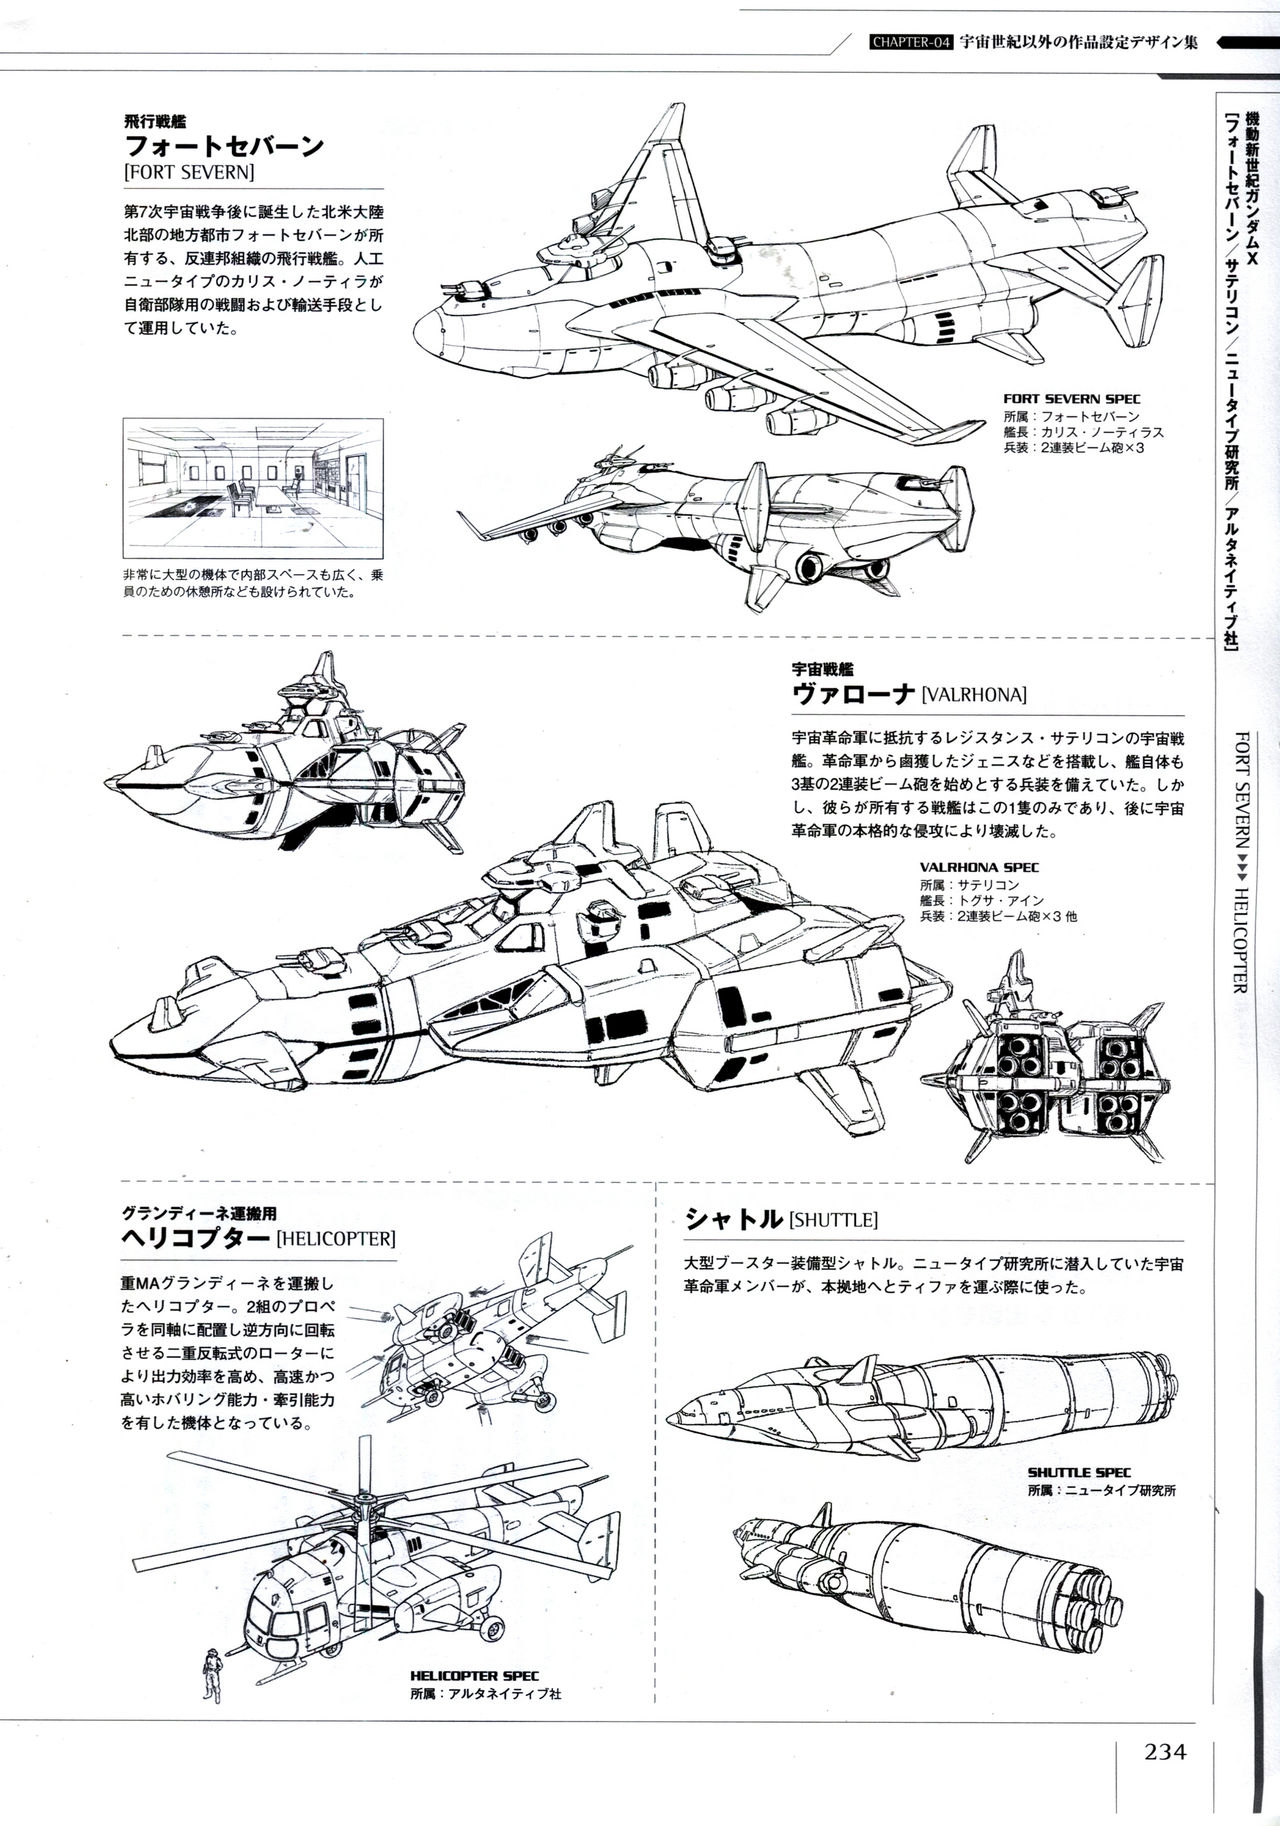 Mobile Suit Gundam - Ship & Aerospace Plane Encyclopedia - Revised Edition 239